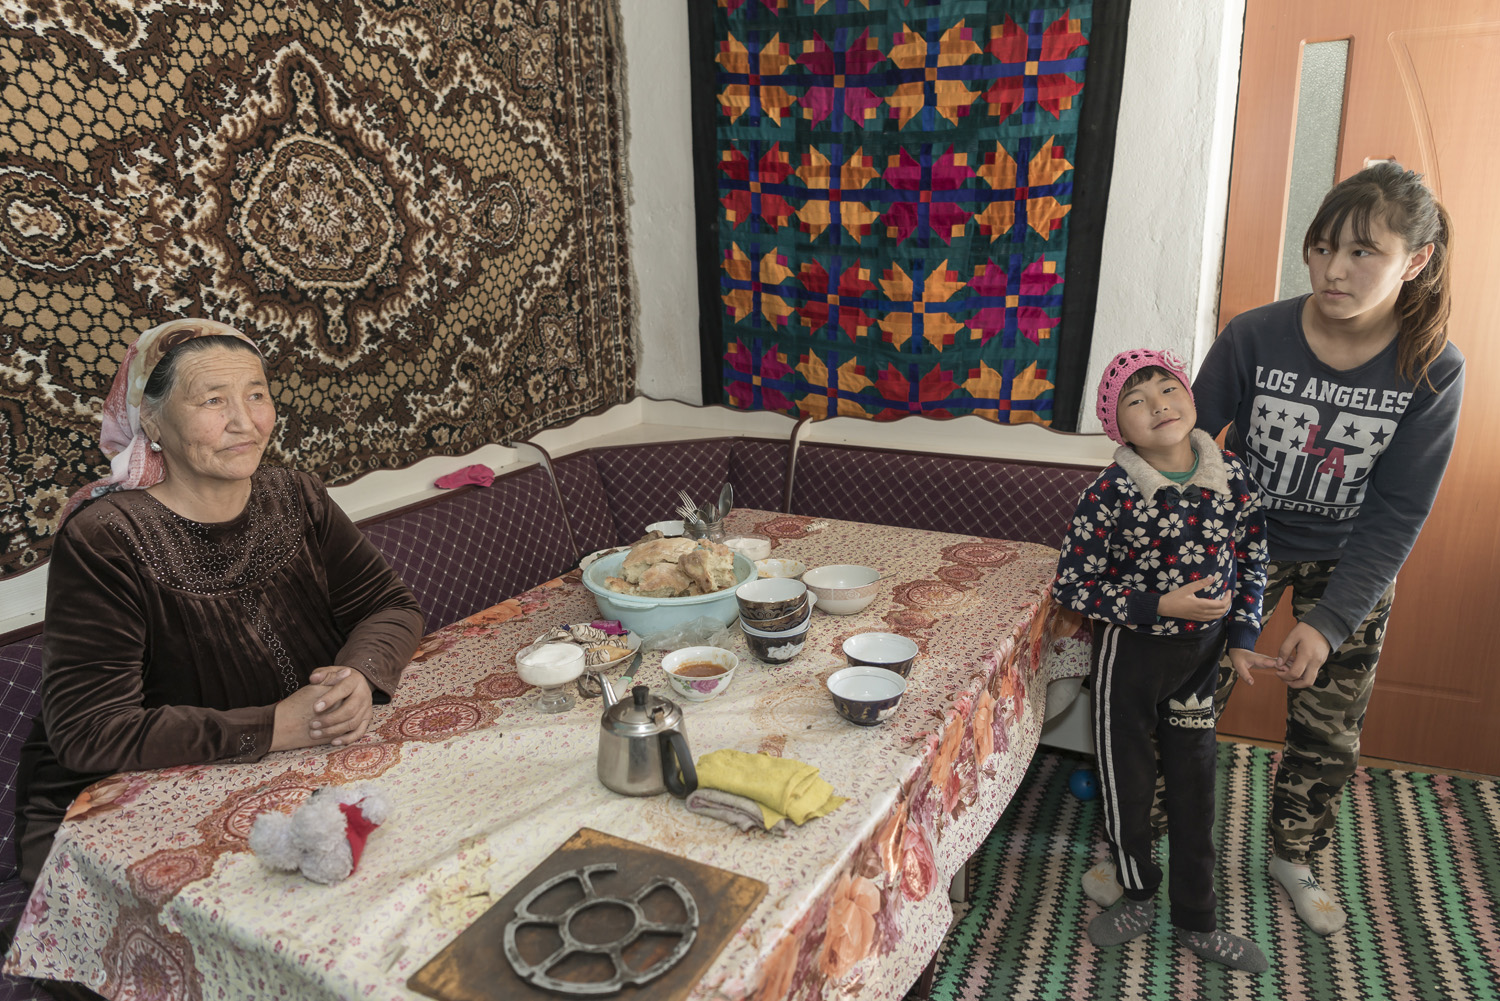 Soviet-Kyrgyzstan-home-elderly-jo-kearney-photography-video-grandparents-caring-soviet-kyrgyzstan.jpg